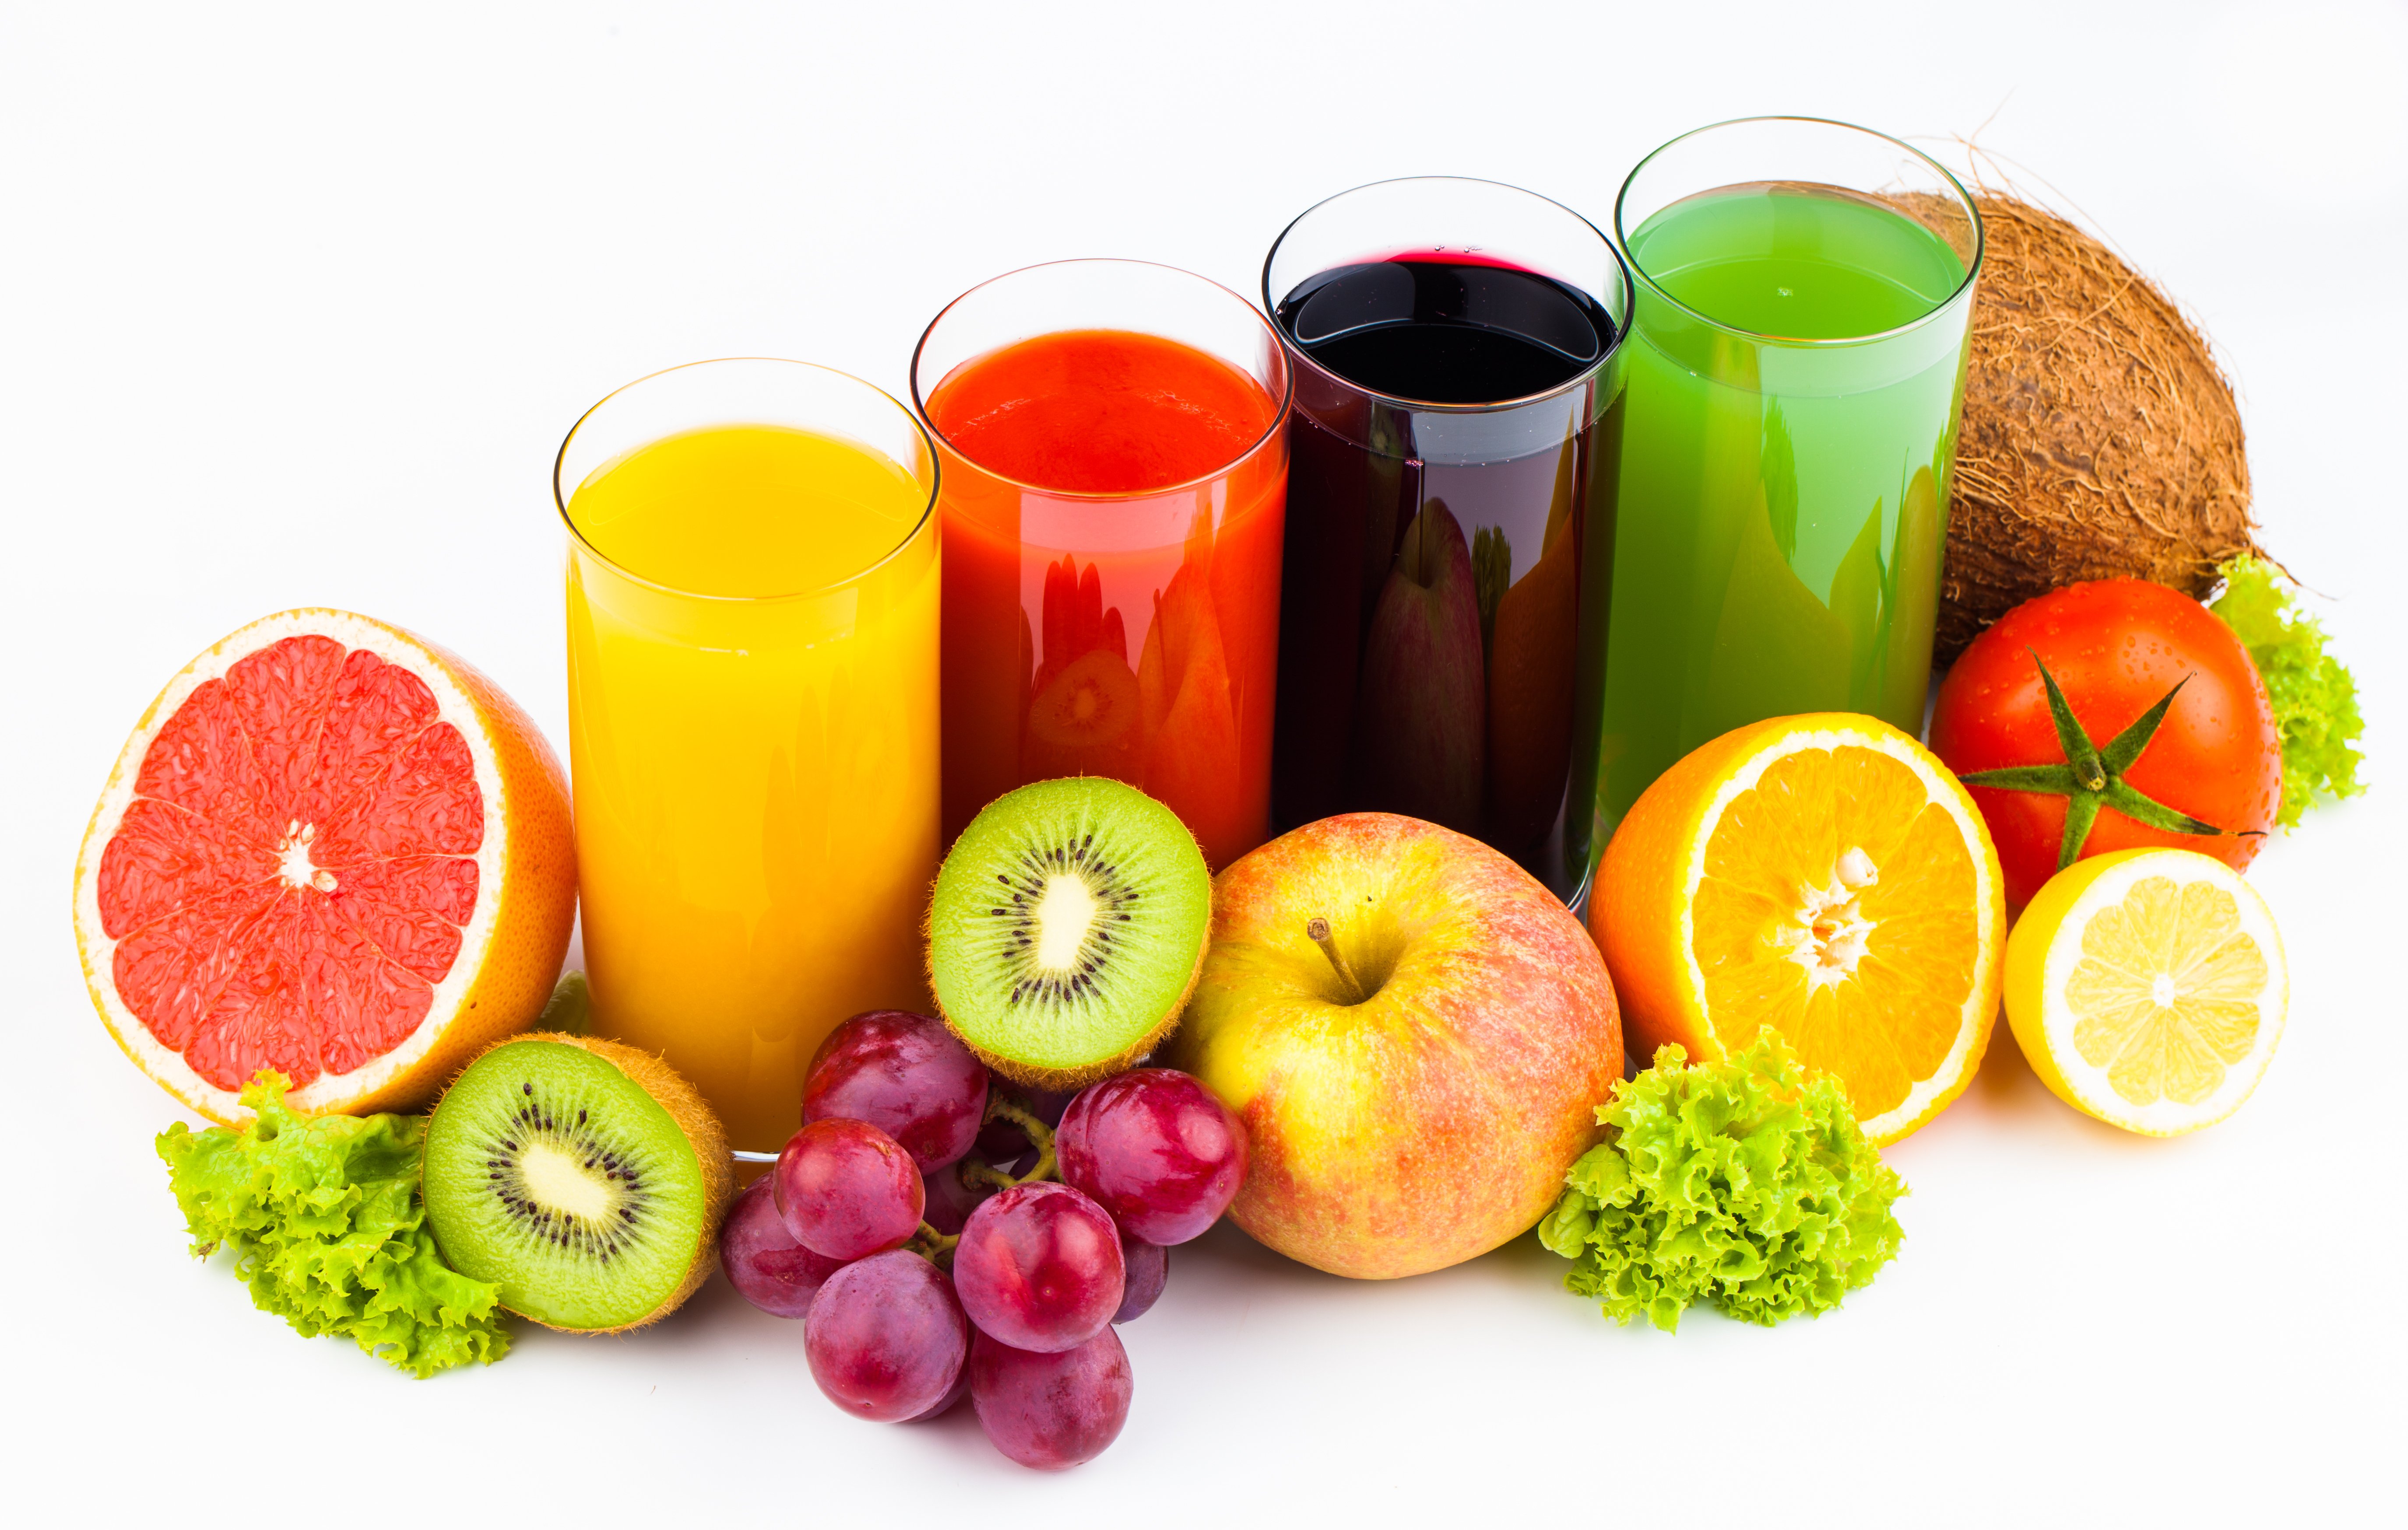 Drinks-Juice-Orange-Fruit-Kiwi-Apples-Grapes-Highball-Glass ...